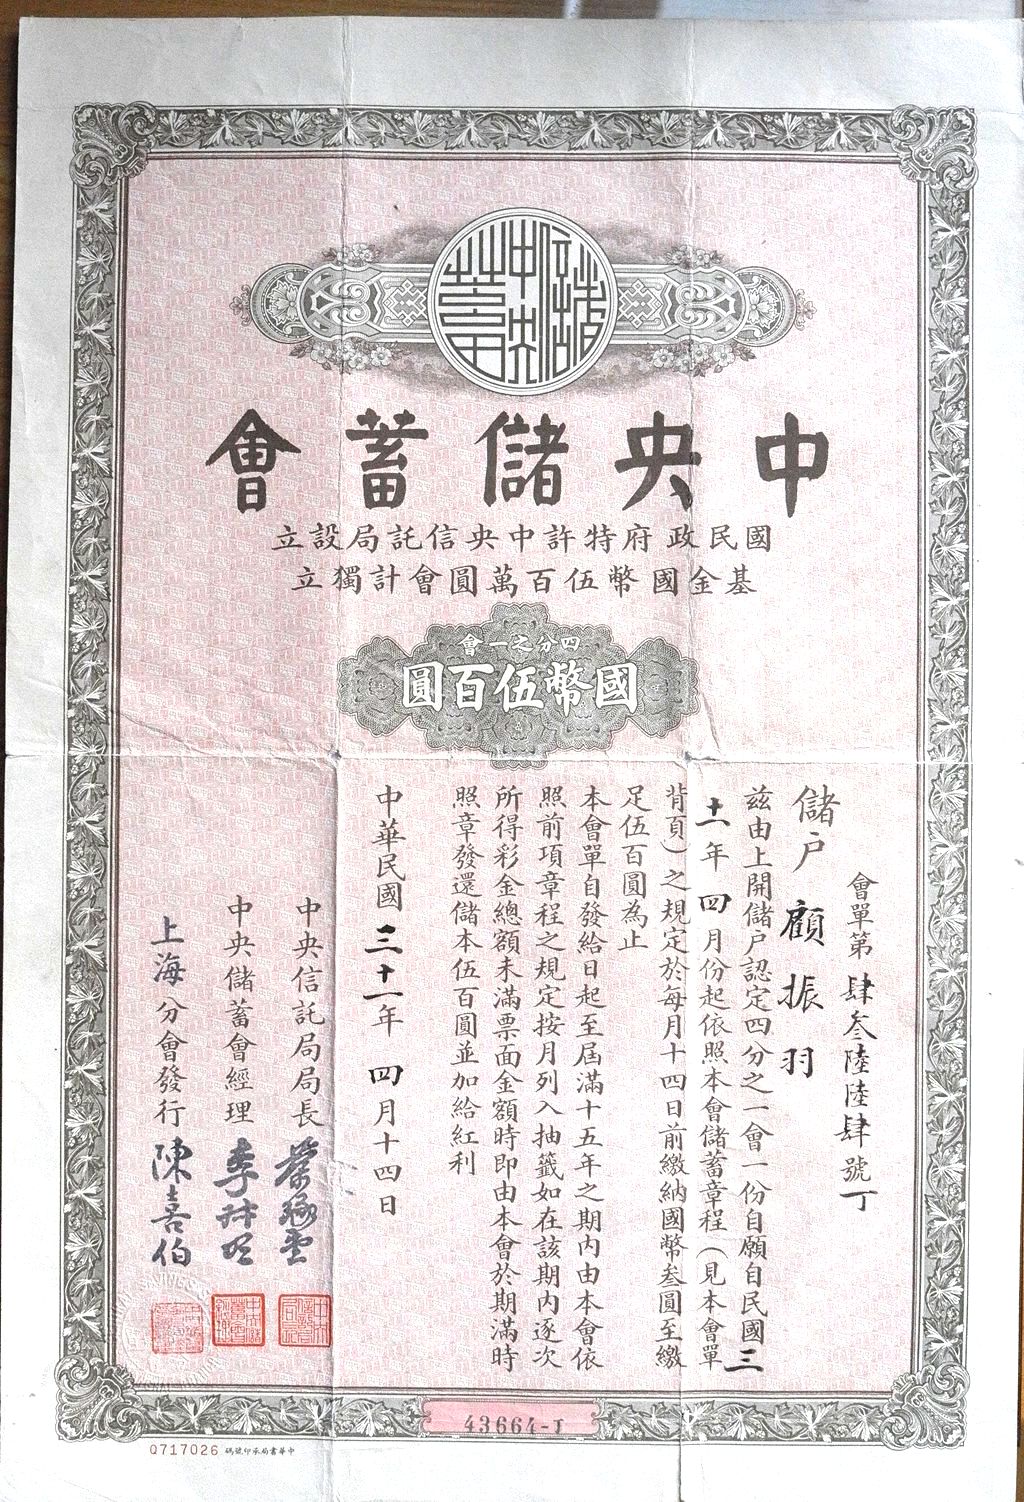 B2730, China Central Savings Society, 500 Dollars (1/4 Lot) Lottery Bond Loan, 1942